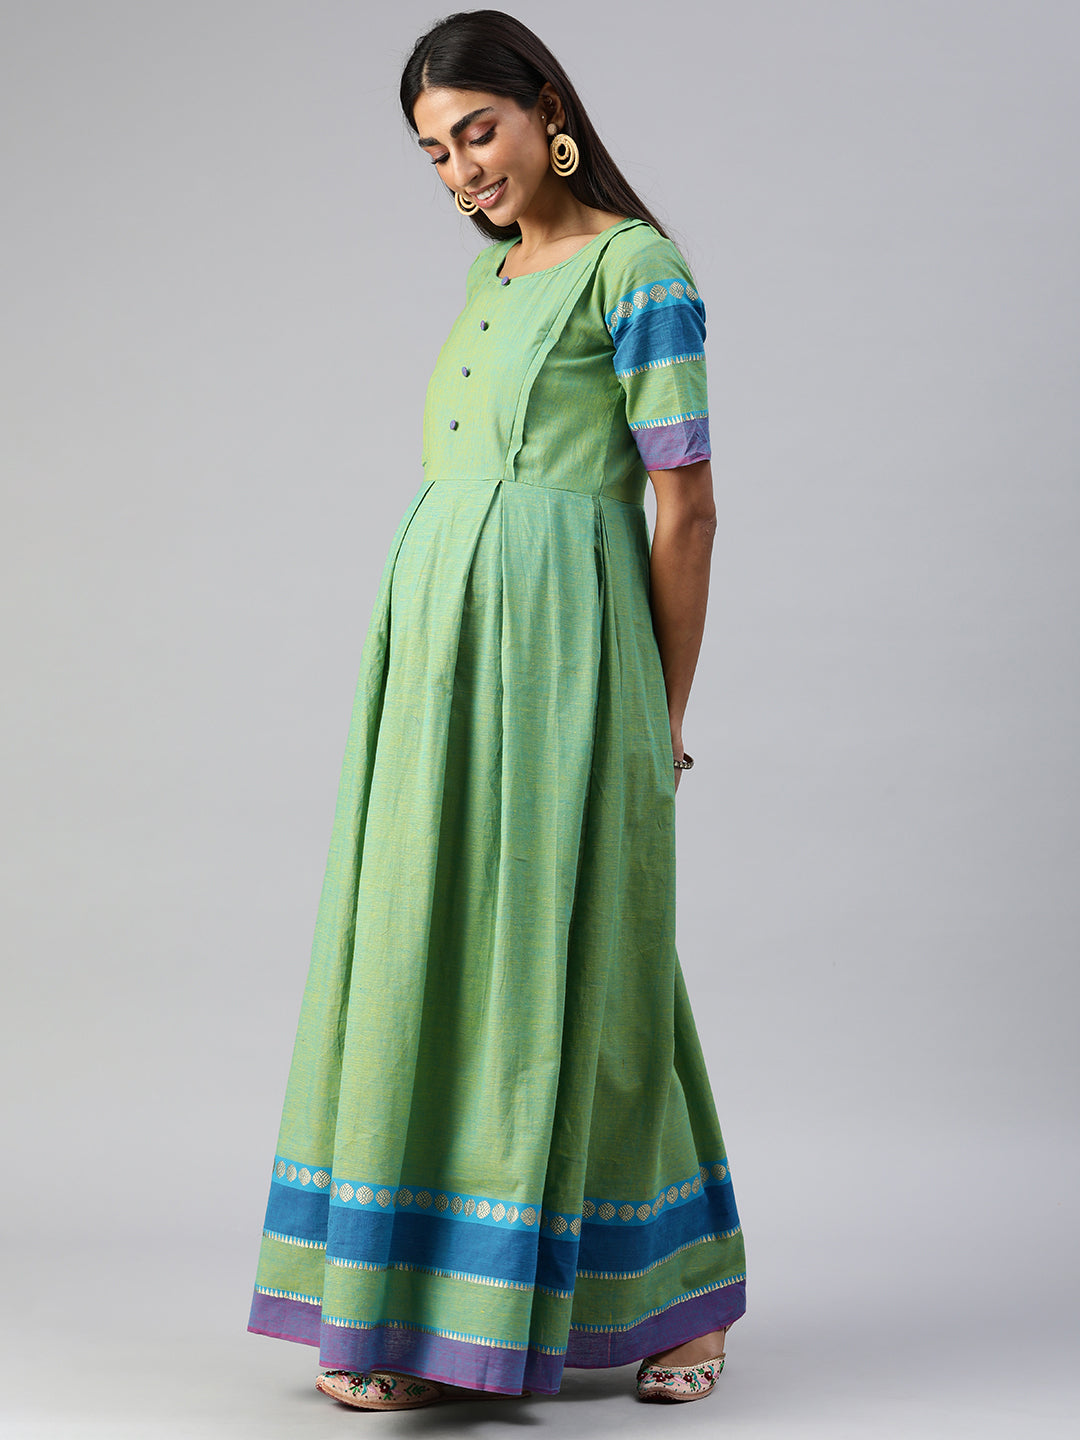 EDISHNAL Women A-line Green Dress - Buy EDISHNAL Women A-line Green Dress  Online at Best Prices in India | Flipkart.com